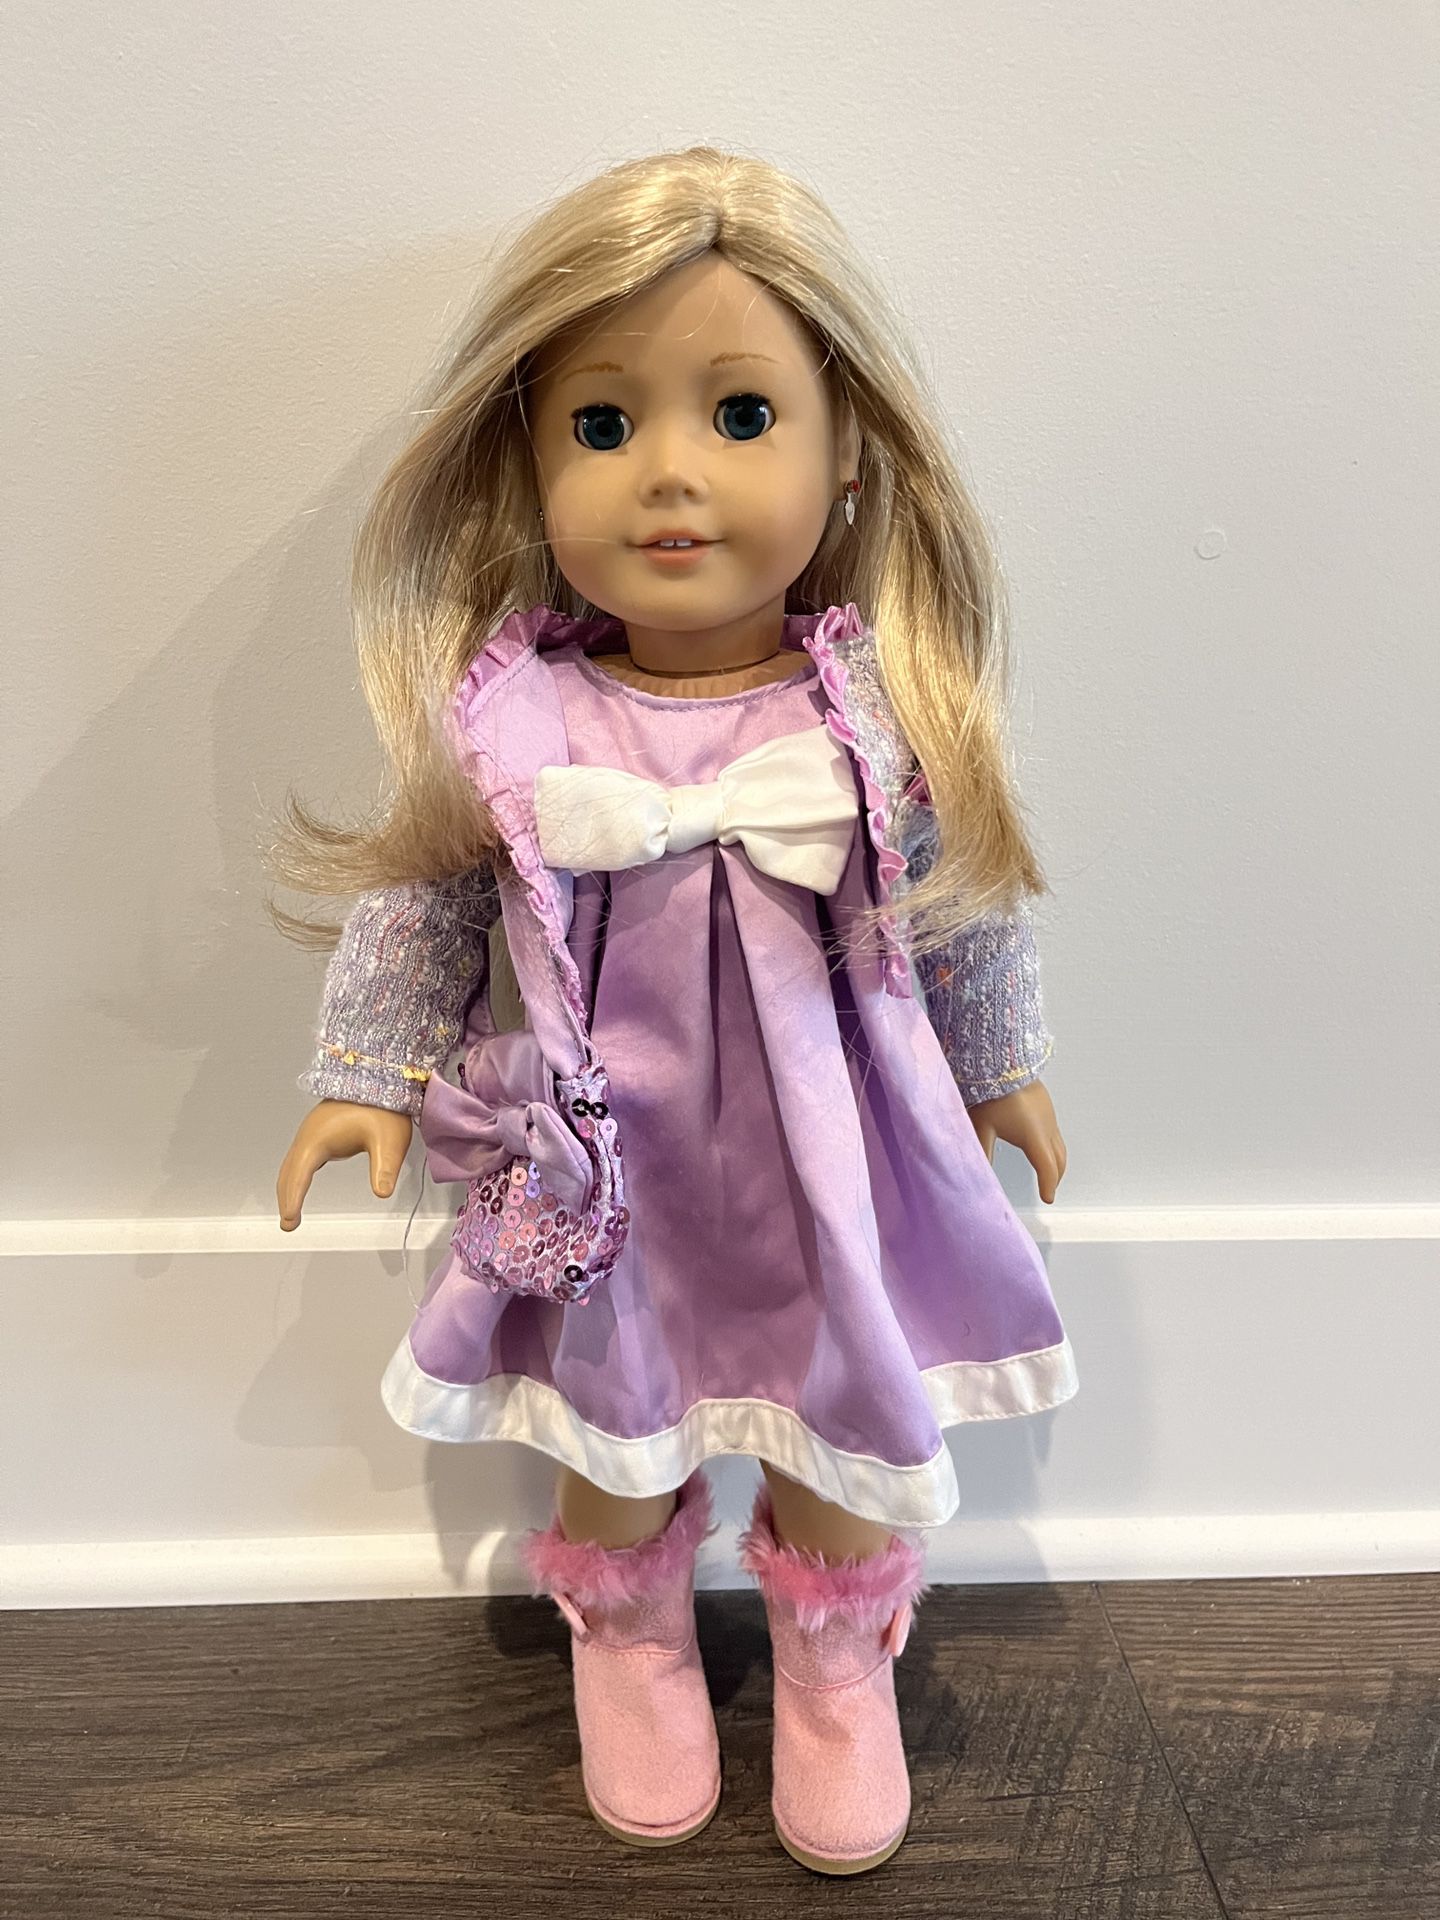 American Girl Doll With Pierced ears